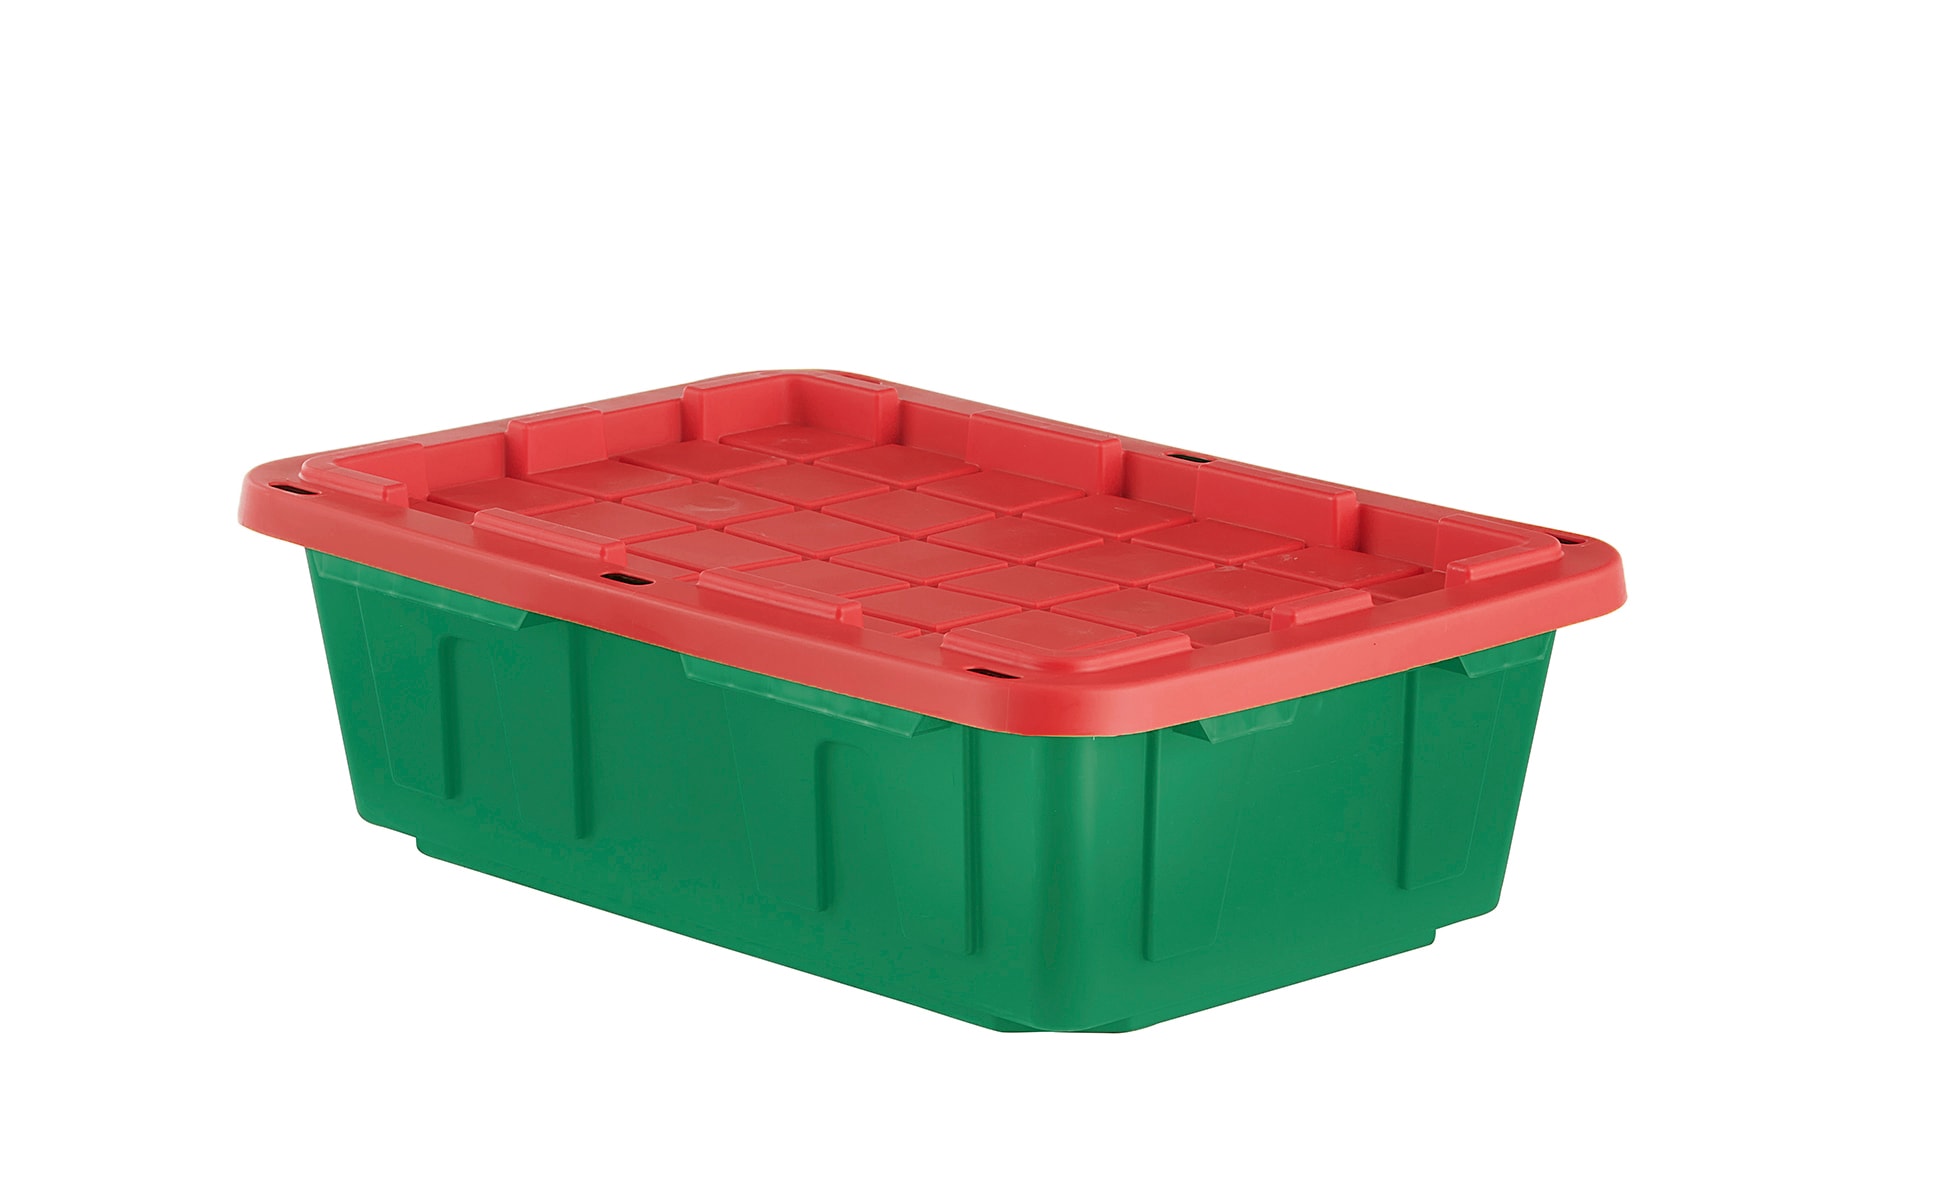 HOMZ Durabilt 27 Gallon Heavy Duty Holiday Storage Tote, Green/Red (2  Pack), 1 Piece - Harris Teeter